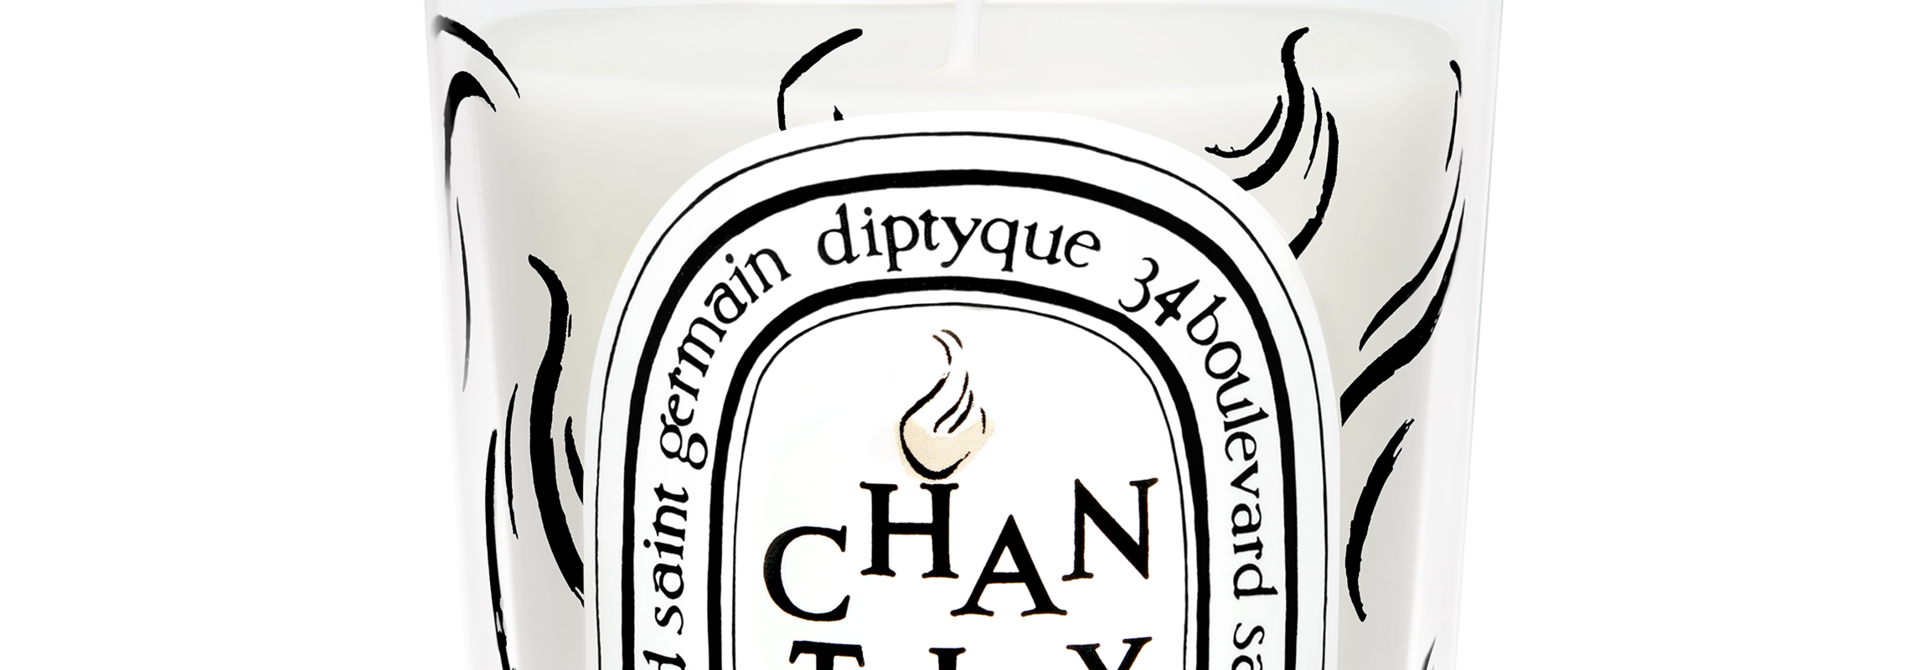 Bougie Chantilly 190gr Edition Limitée Café Verlet